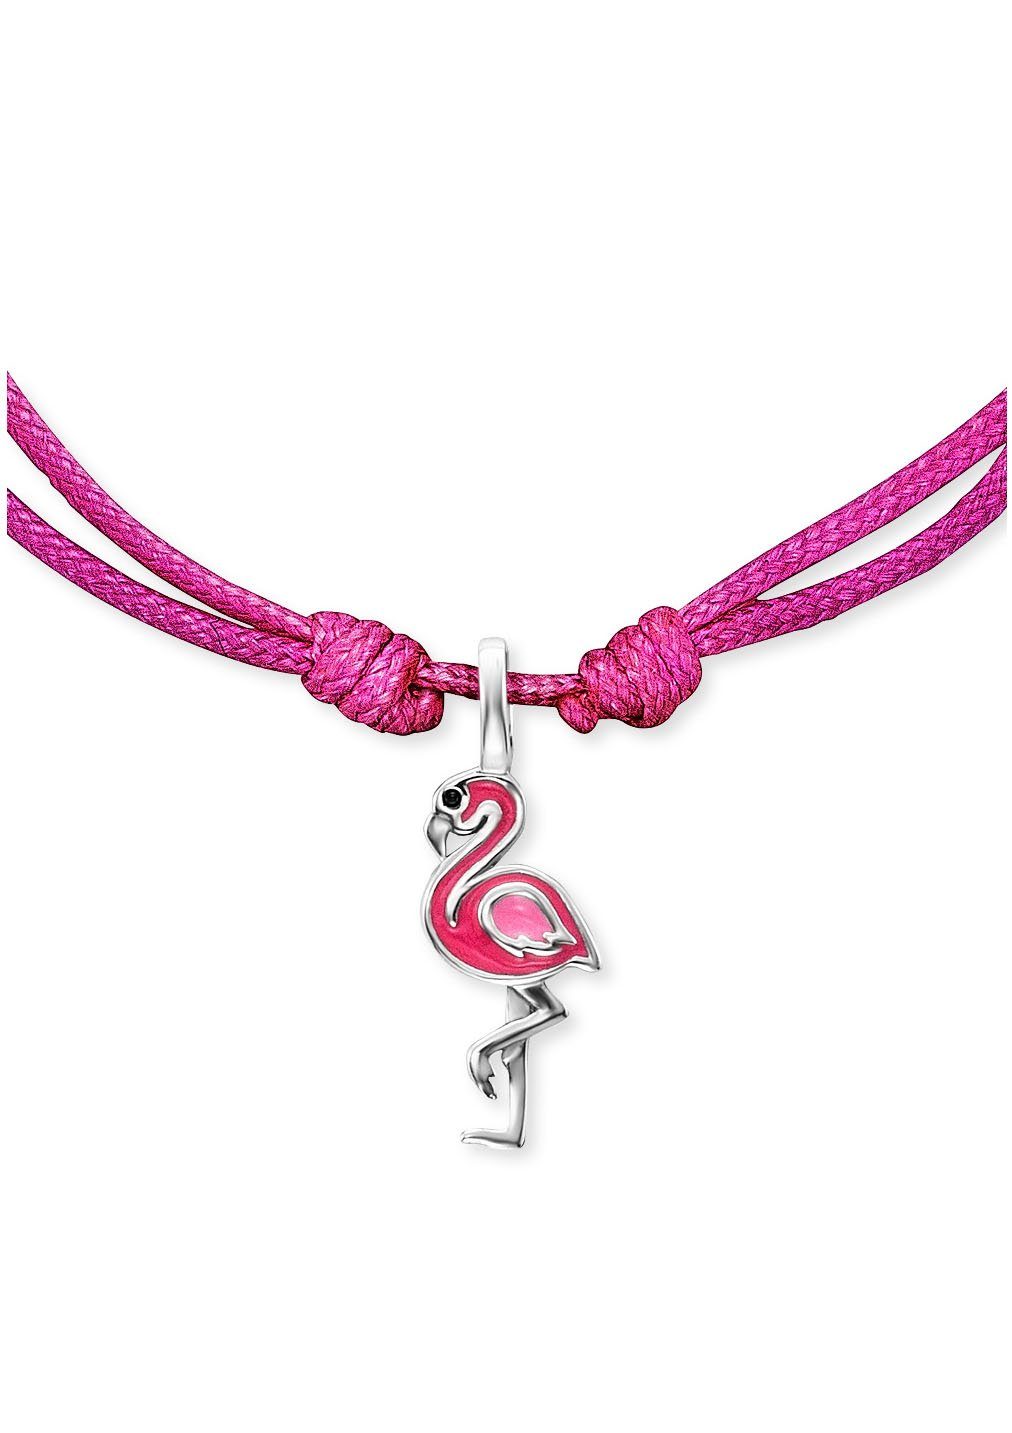 Herzengel Armband Flamingo, Emaille mit HEB-FLAMINGO